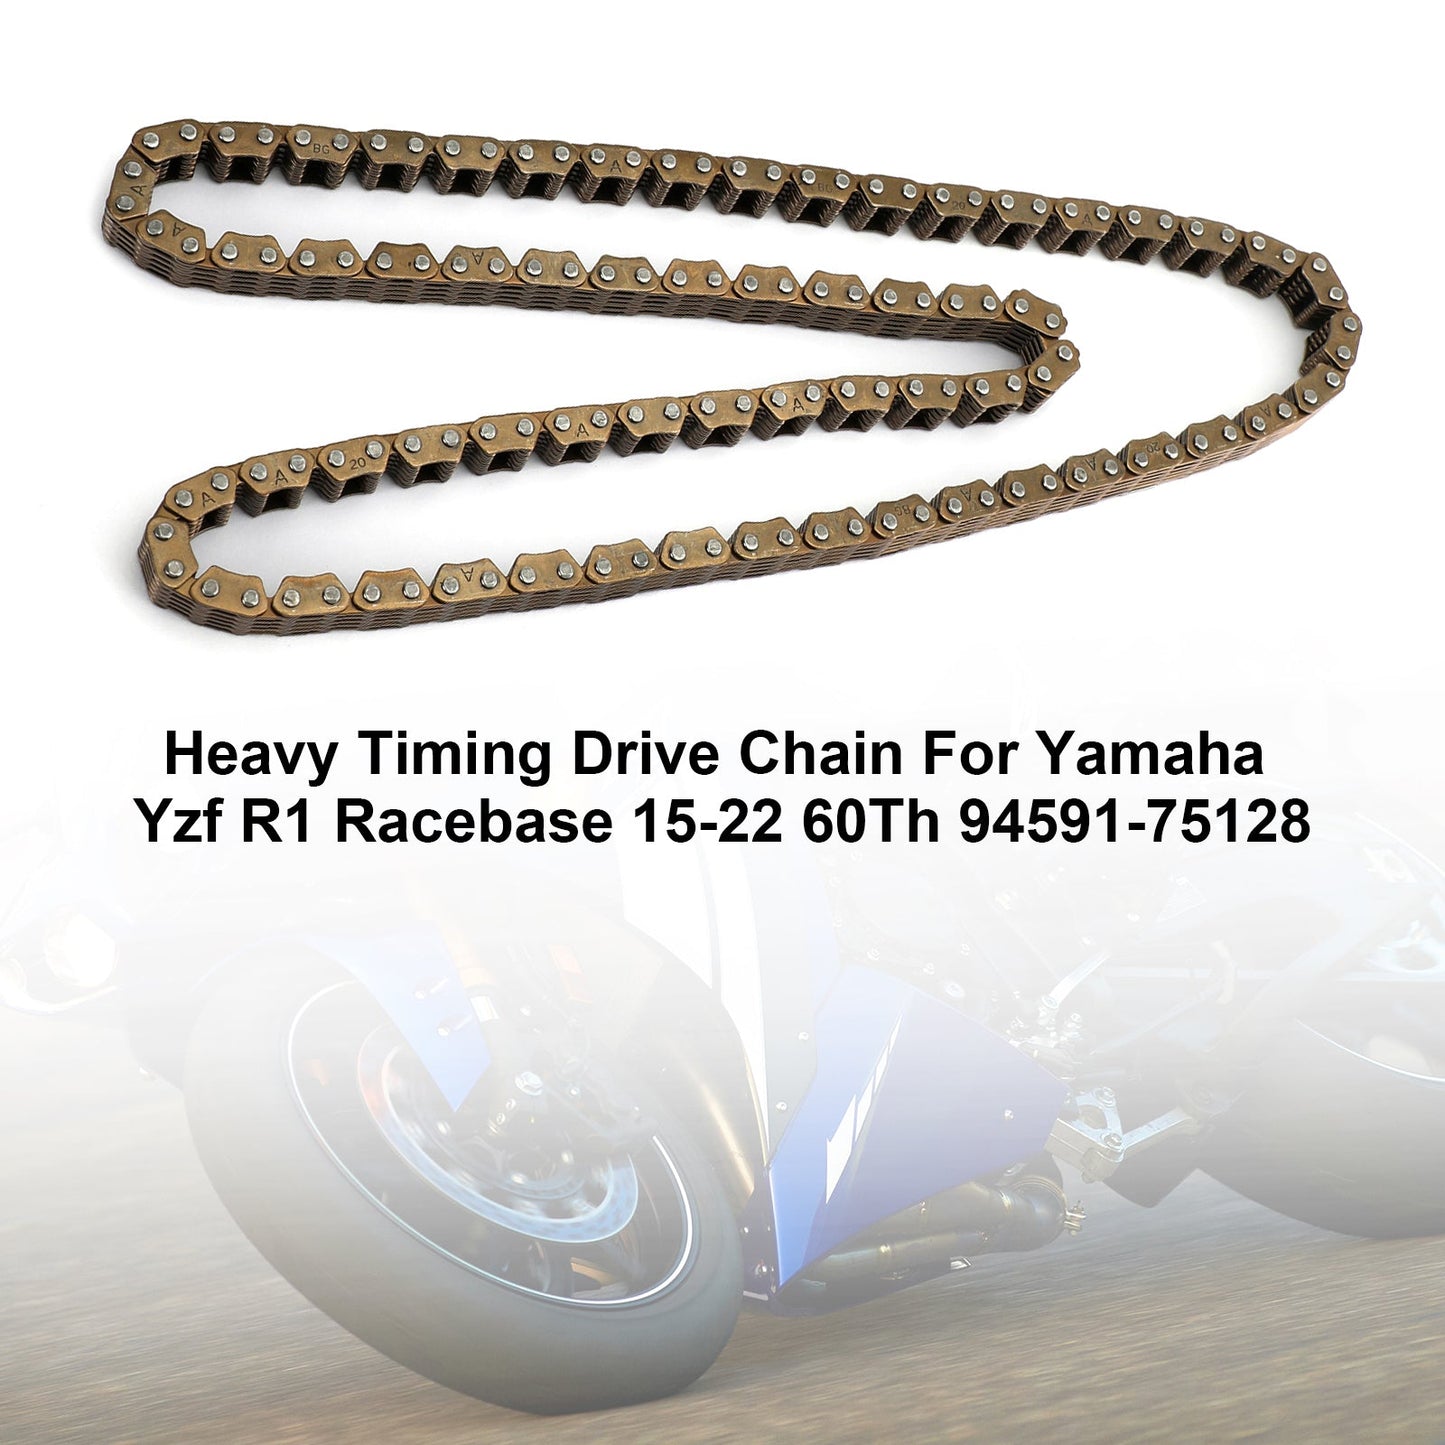 New Heavy Duty Drive Chain For Yamaha Yzf R1 Racebase 15-22 60Th 94591-75128